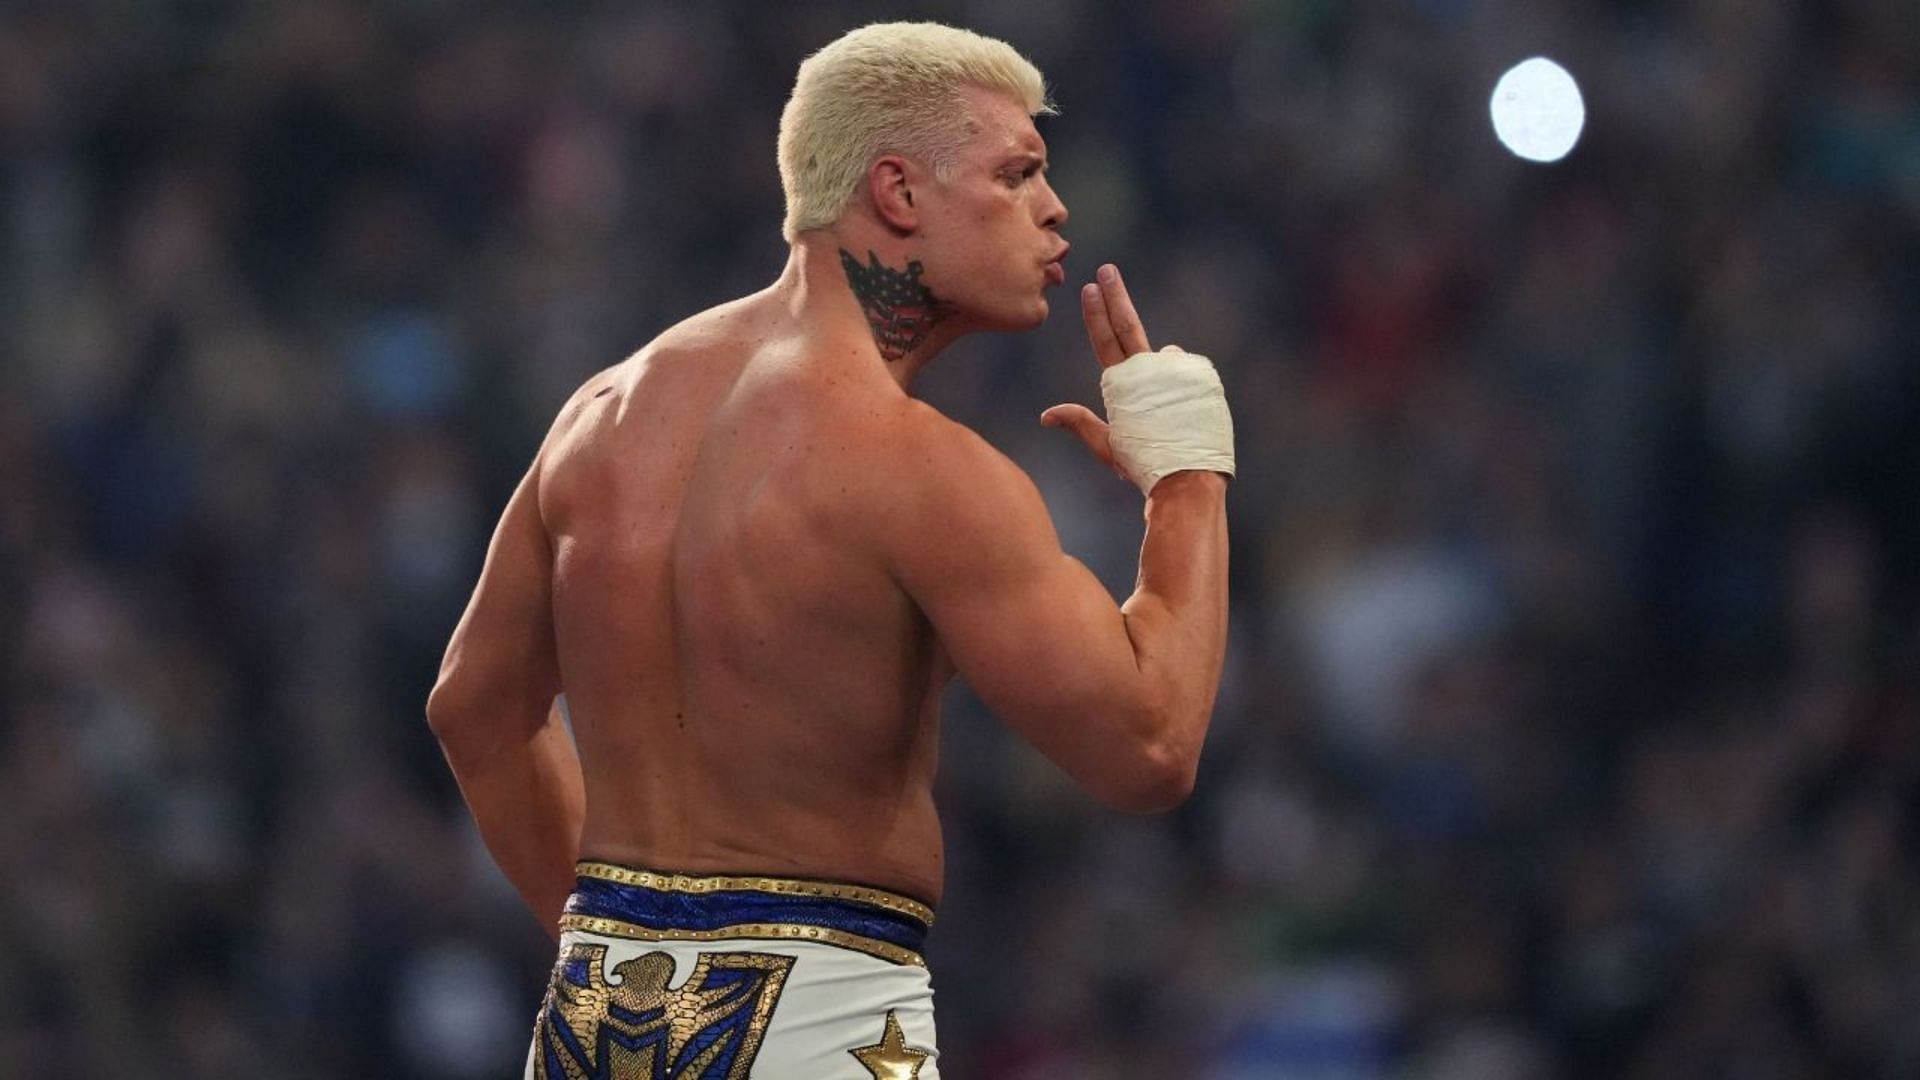 Cody Rhodes suffers new injury at WWE Royal Rumble IMPROVENEWS